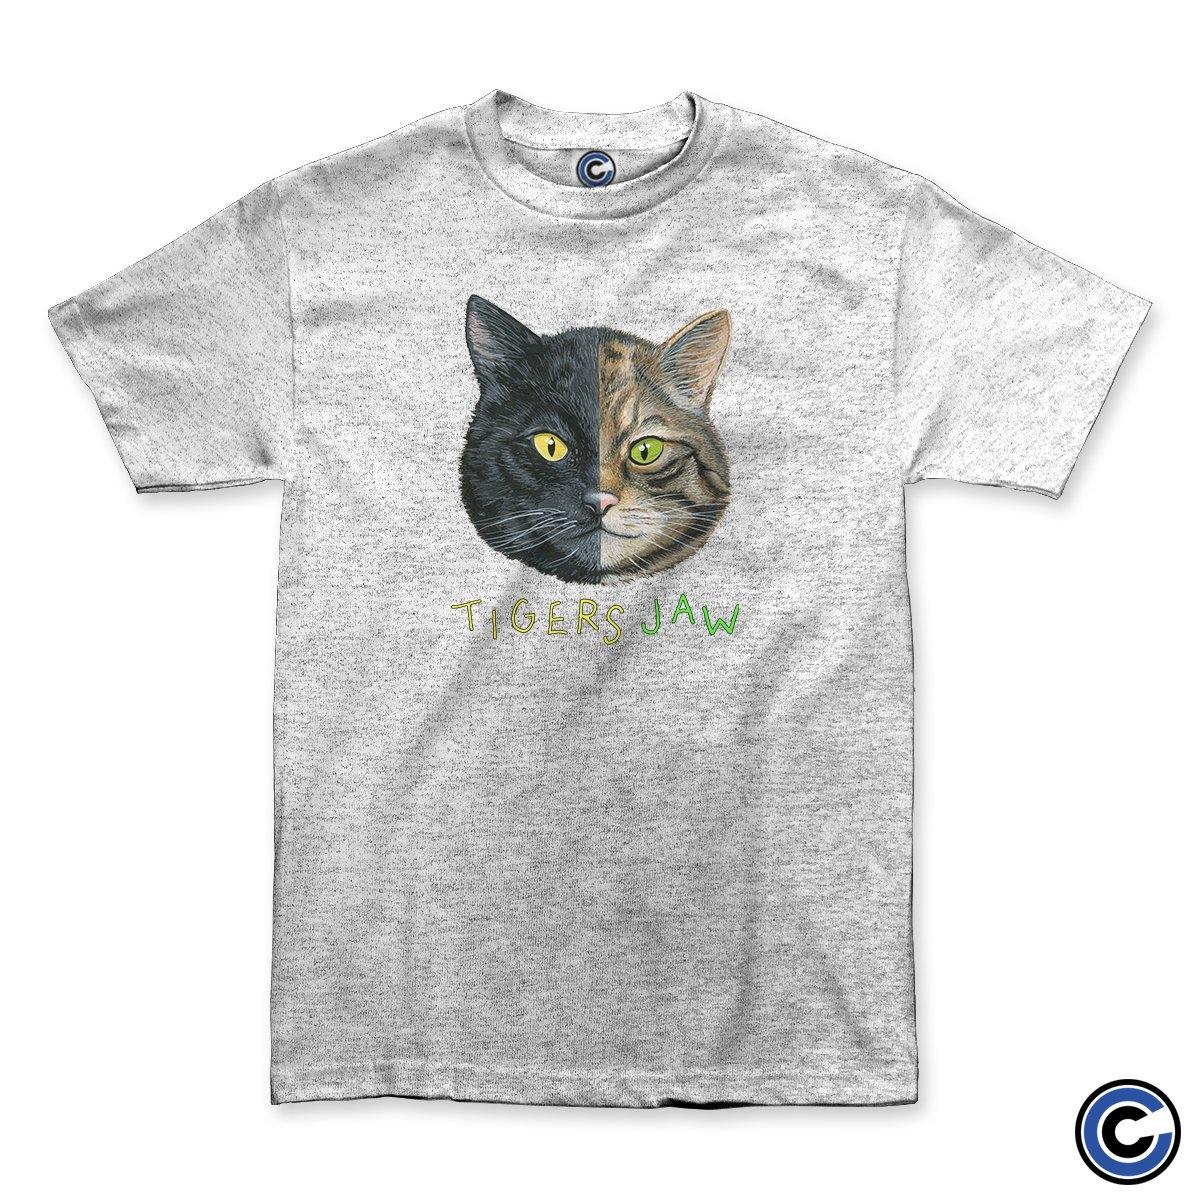 Buy – Tigers Jaw "Cat" Shirt – Band & Music Merch – Cold Cuts Merch